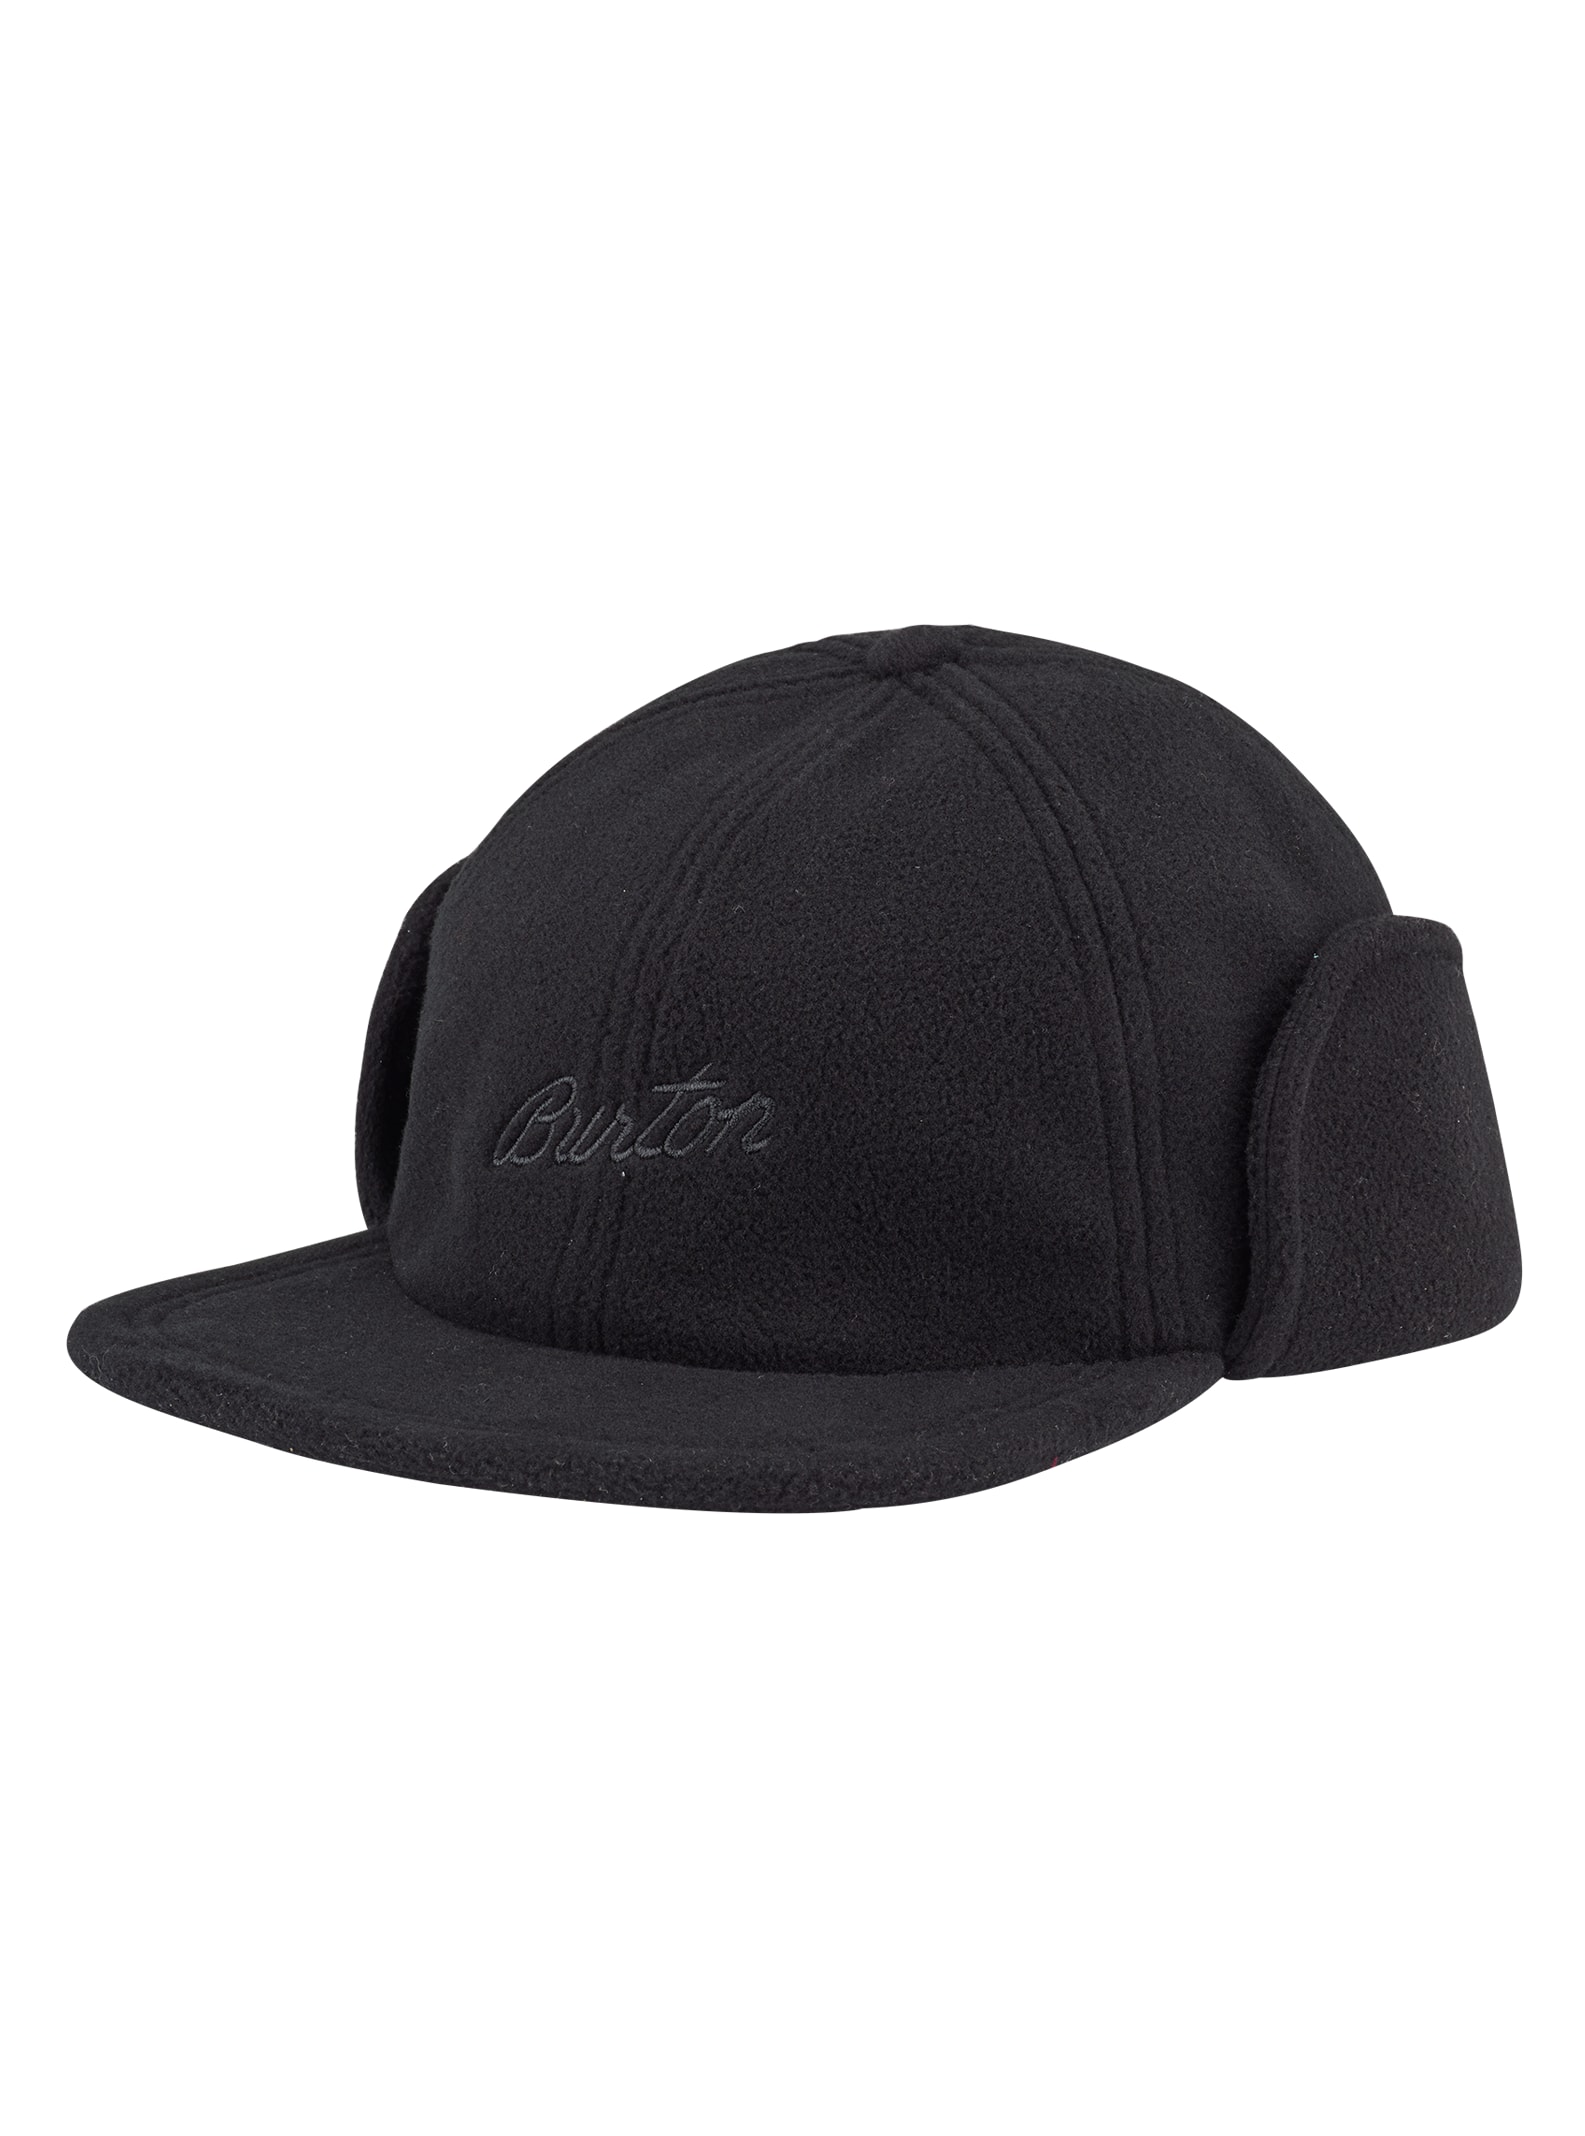 Burton Canyon Fleece Hat | Burton.com Fall 2019 US